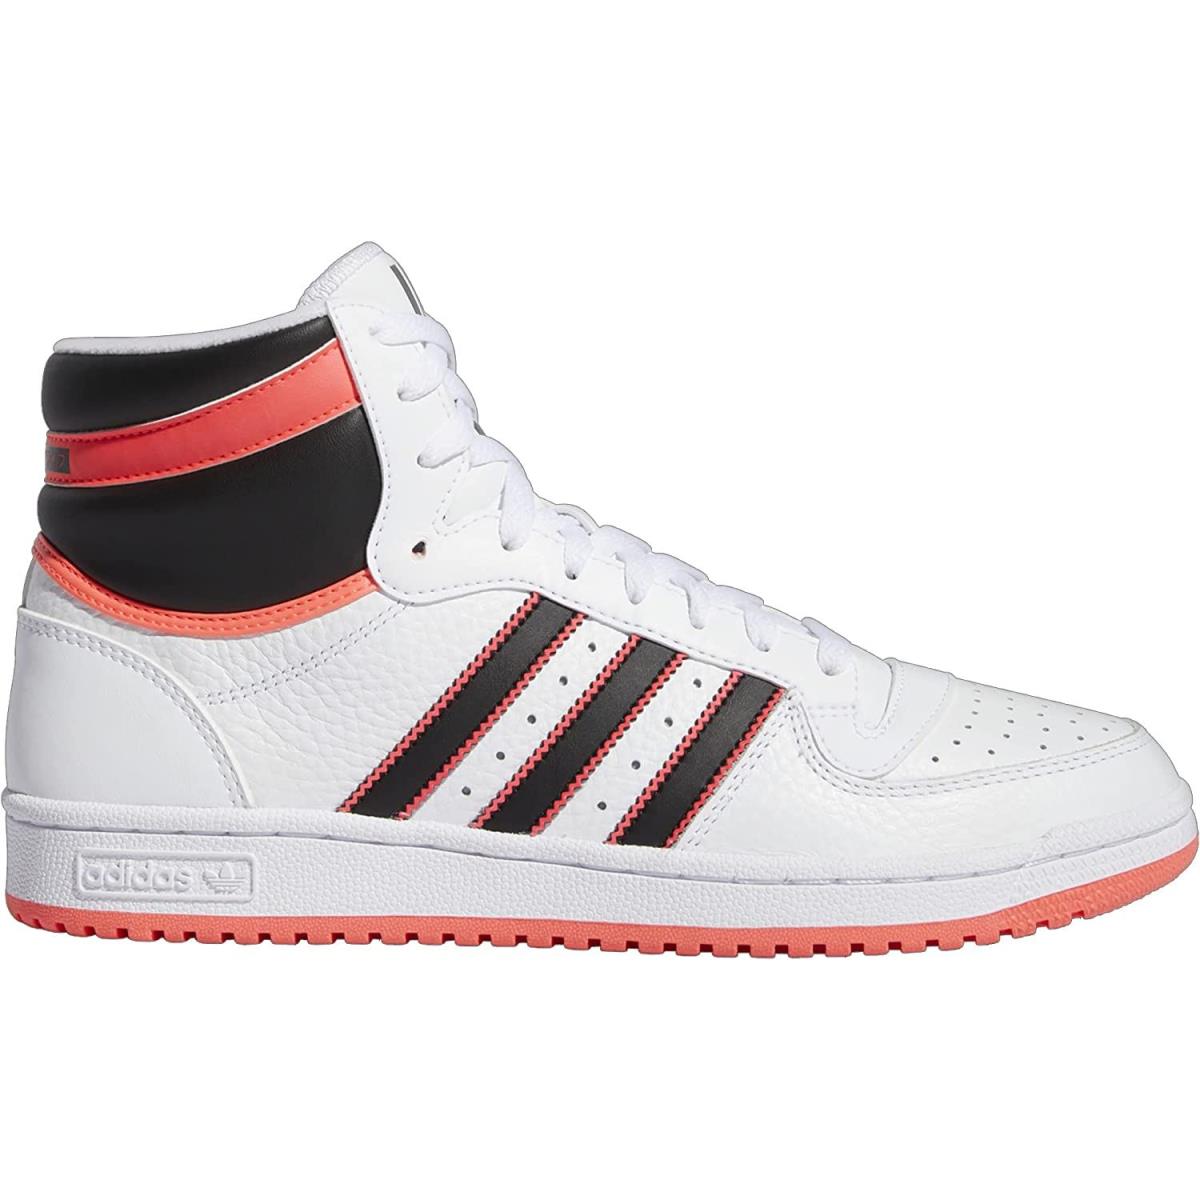 GV9585 Adidas Originals Top Ten RB Men`s Shoes White/pink - White/Pink